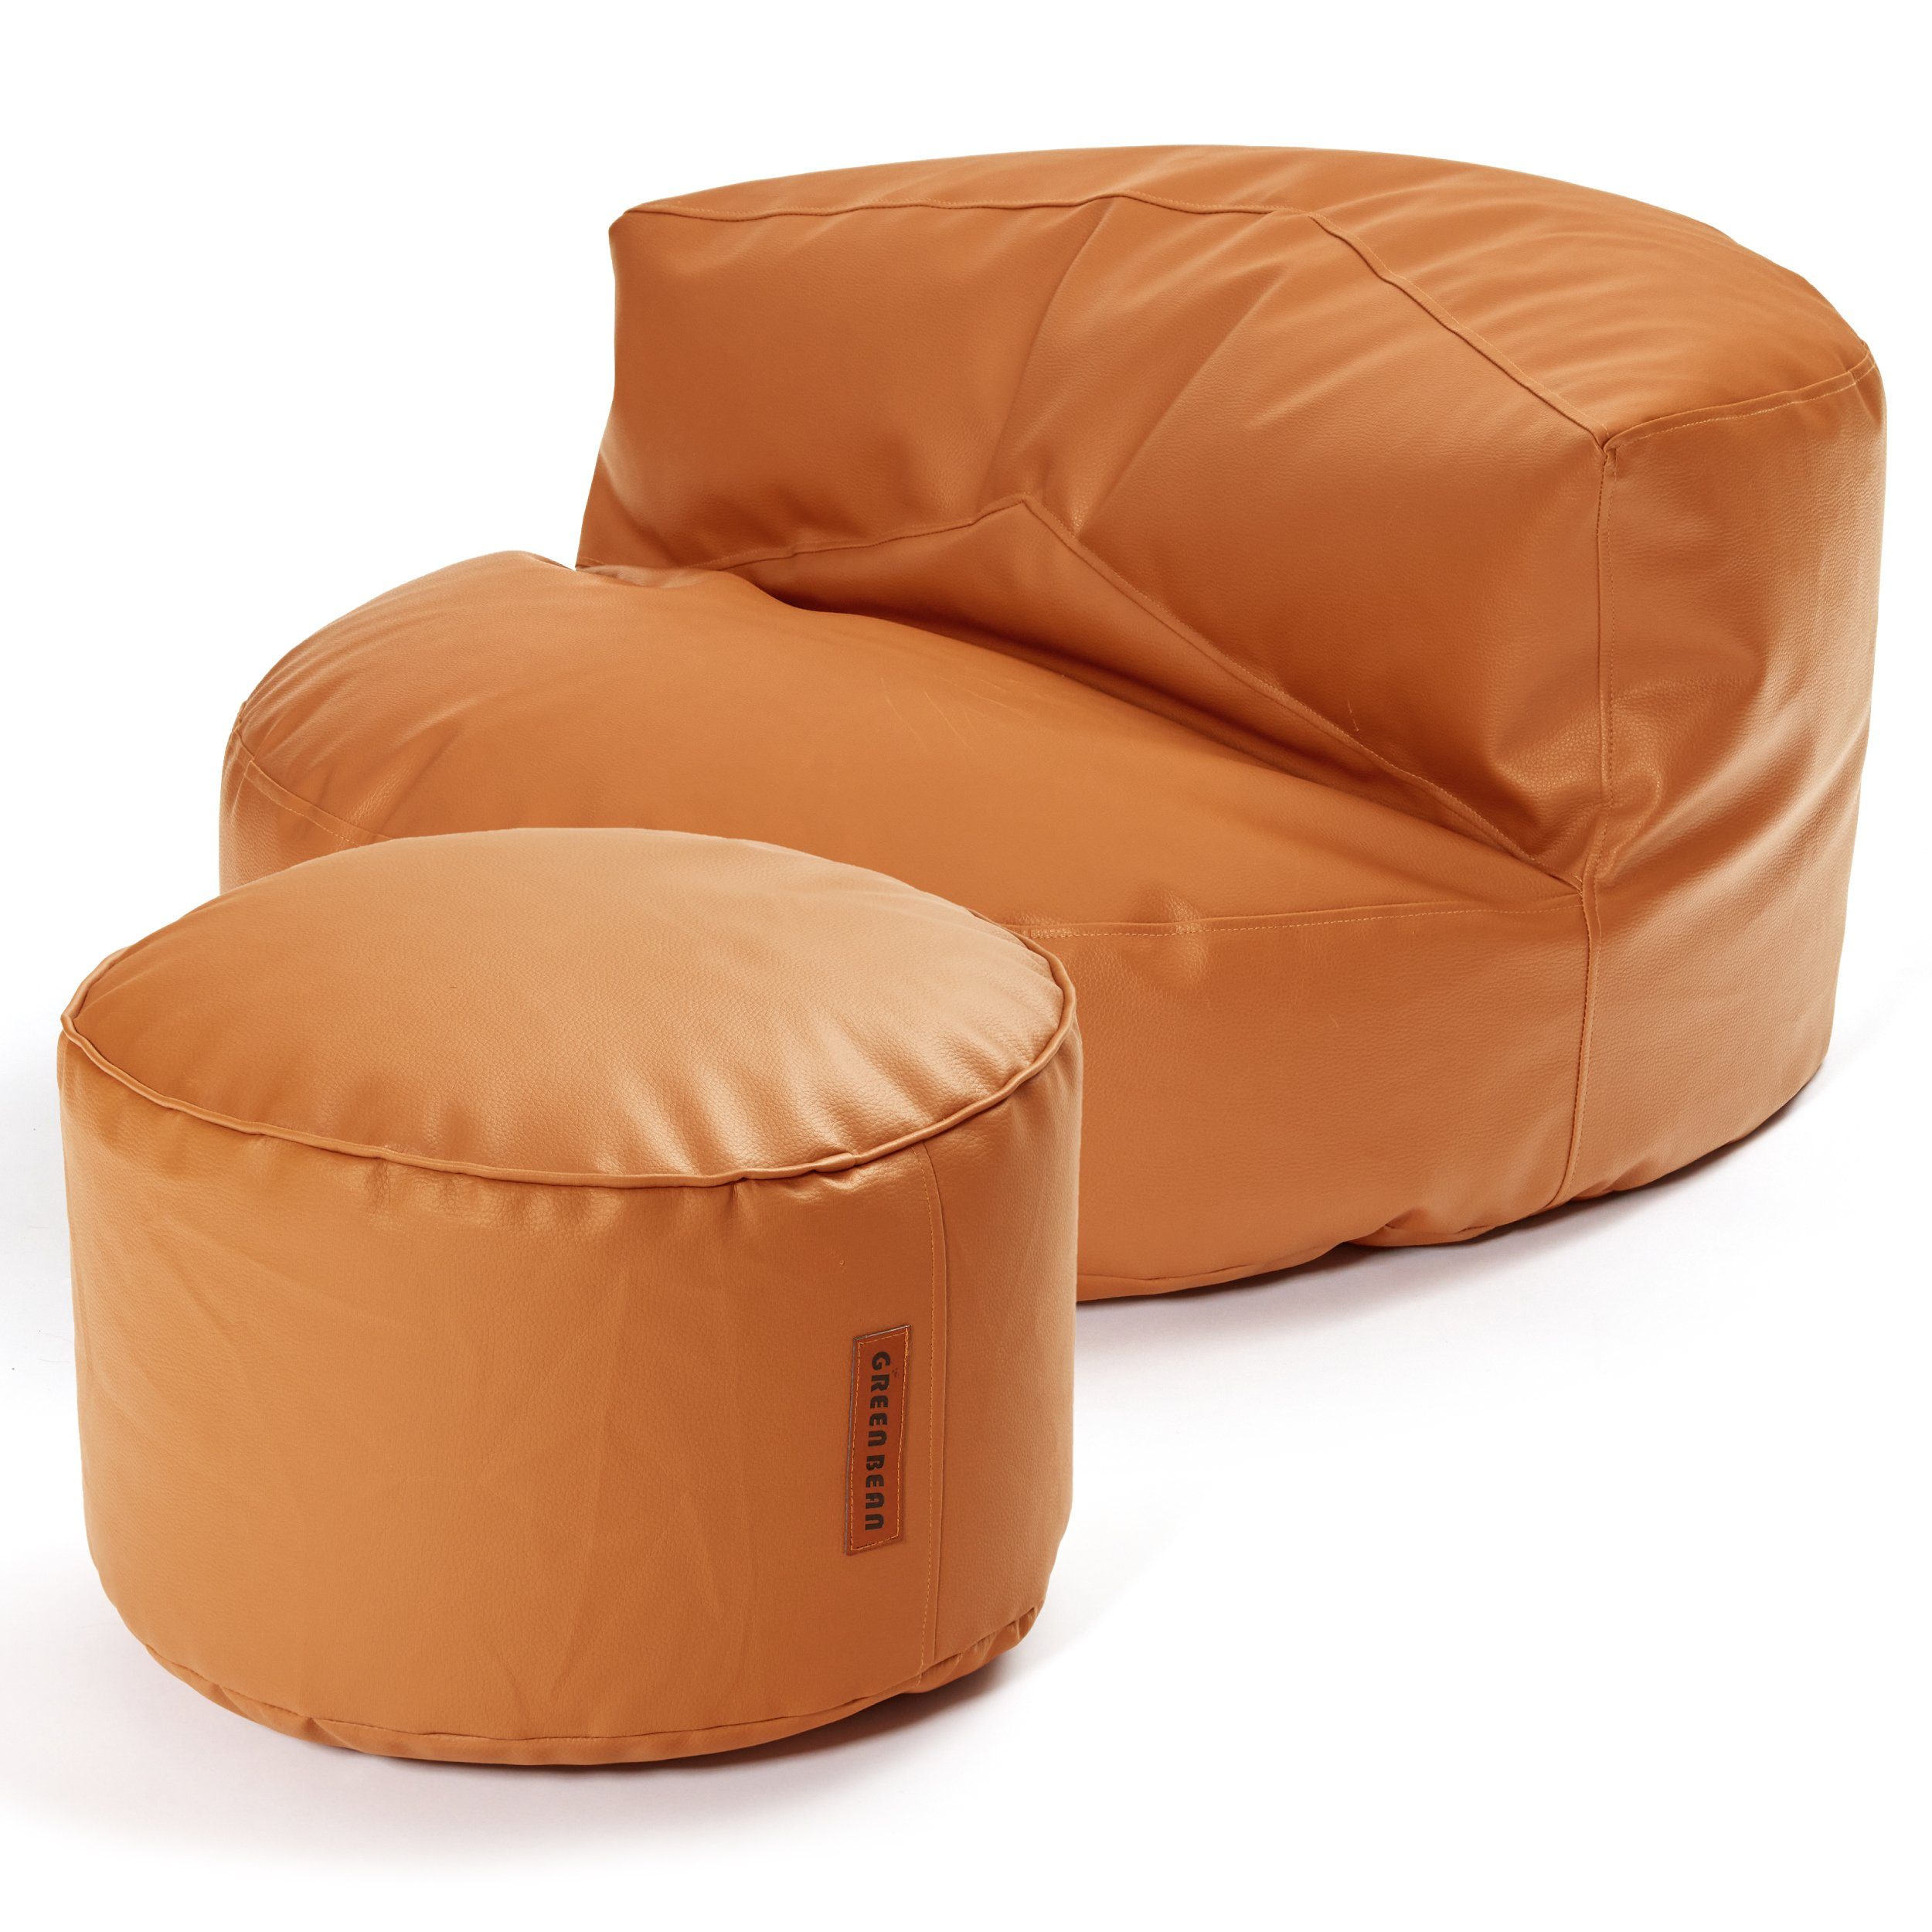 Green Bean Sitzsack Sofa + Pouf Sitzsack als Set aus Kunstleder, EPS Perlen Füllung ca. 90x45cm - Couch XXL Riesensitzsack Lounge Stay Cognac